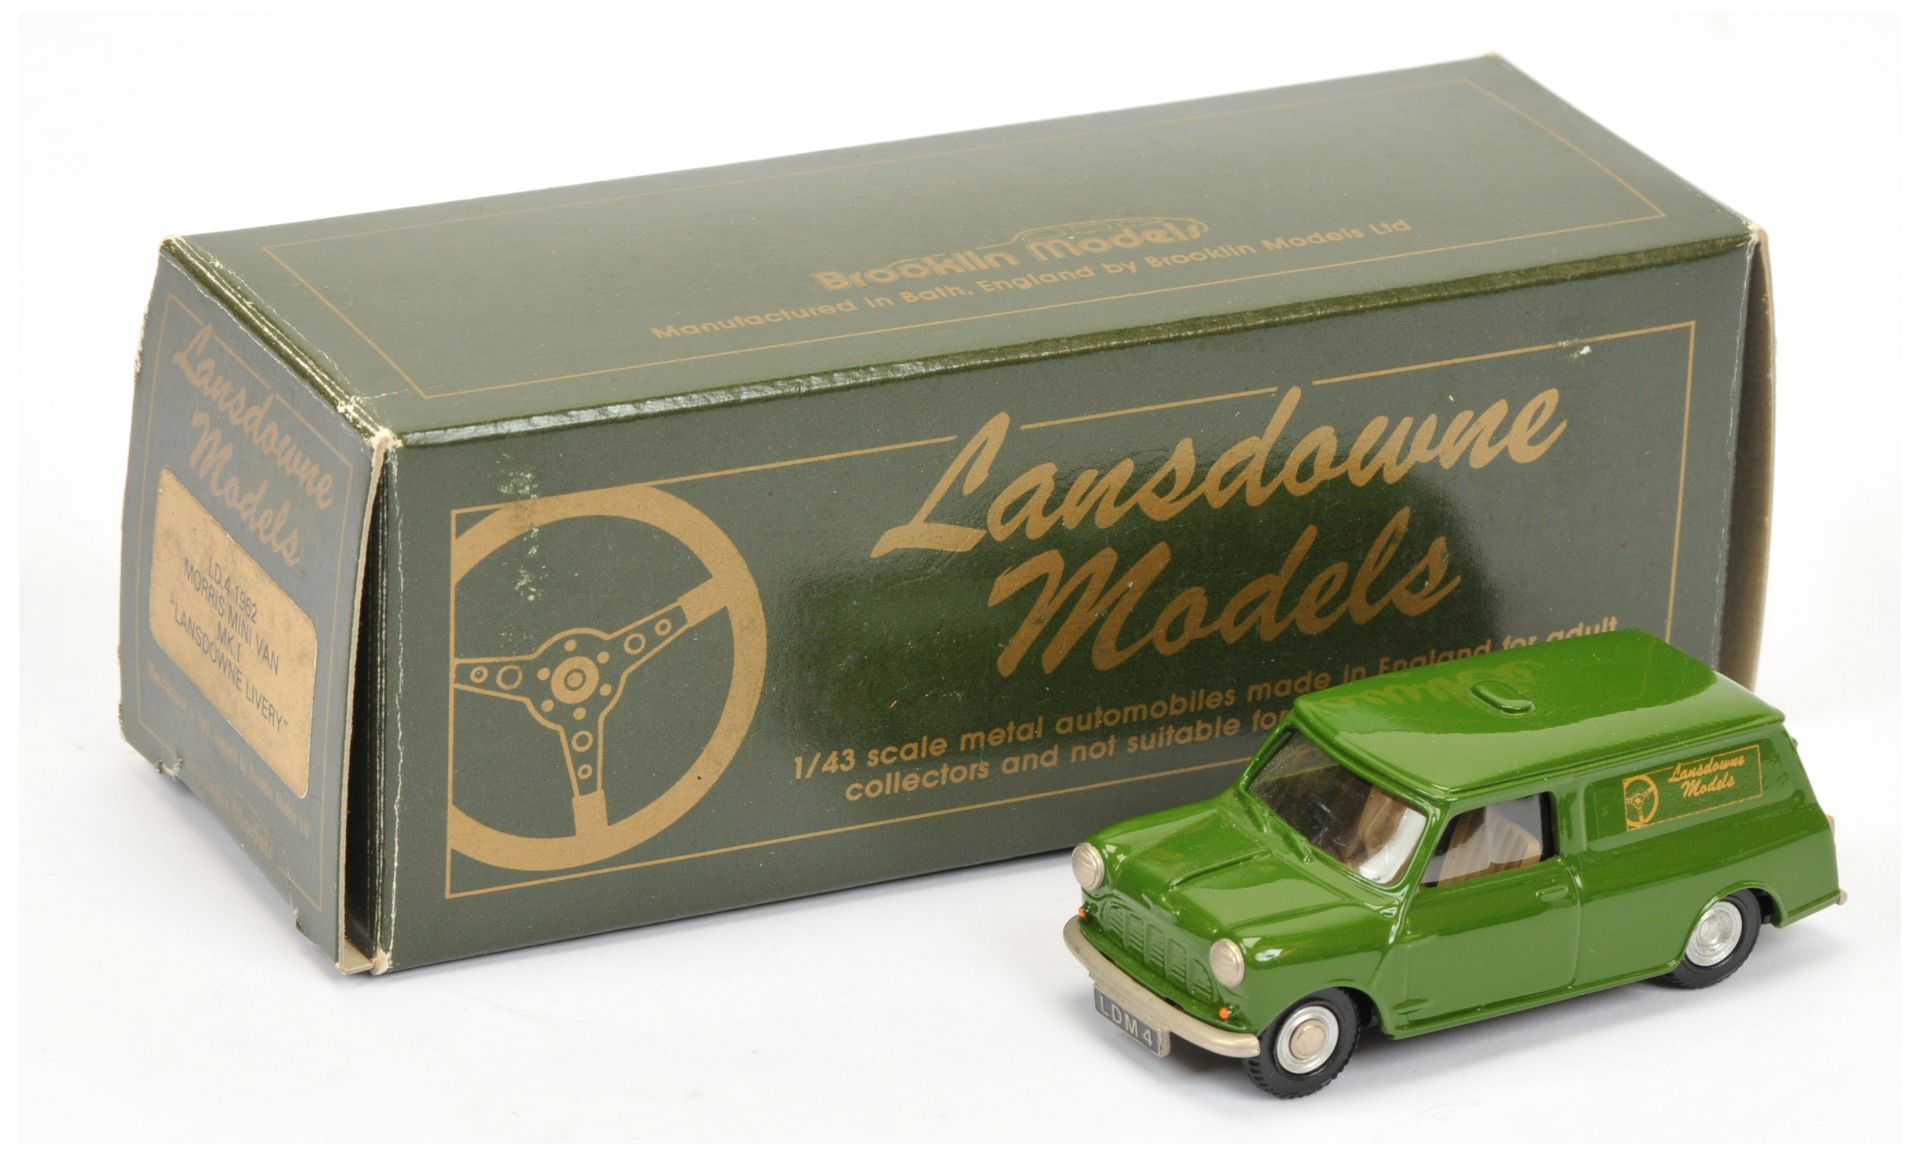 Lansdowne Models 1/43 Scale LD4 1952 Morris Mini Van Mark 1 "Lansdowne Delivery" 